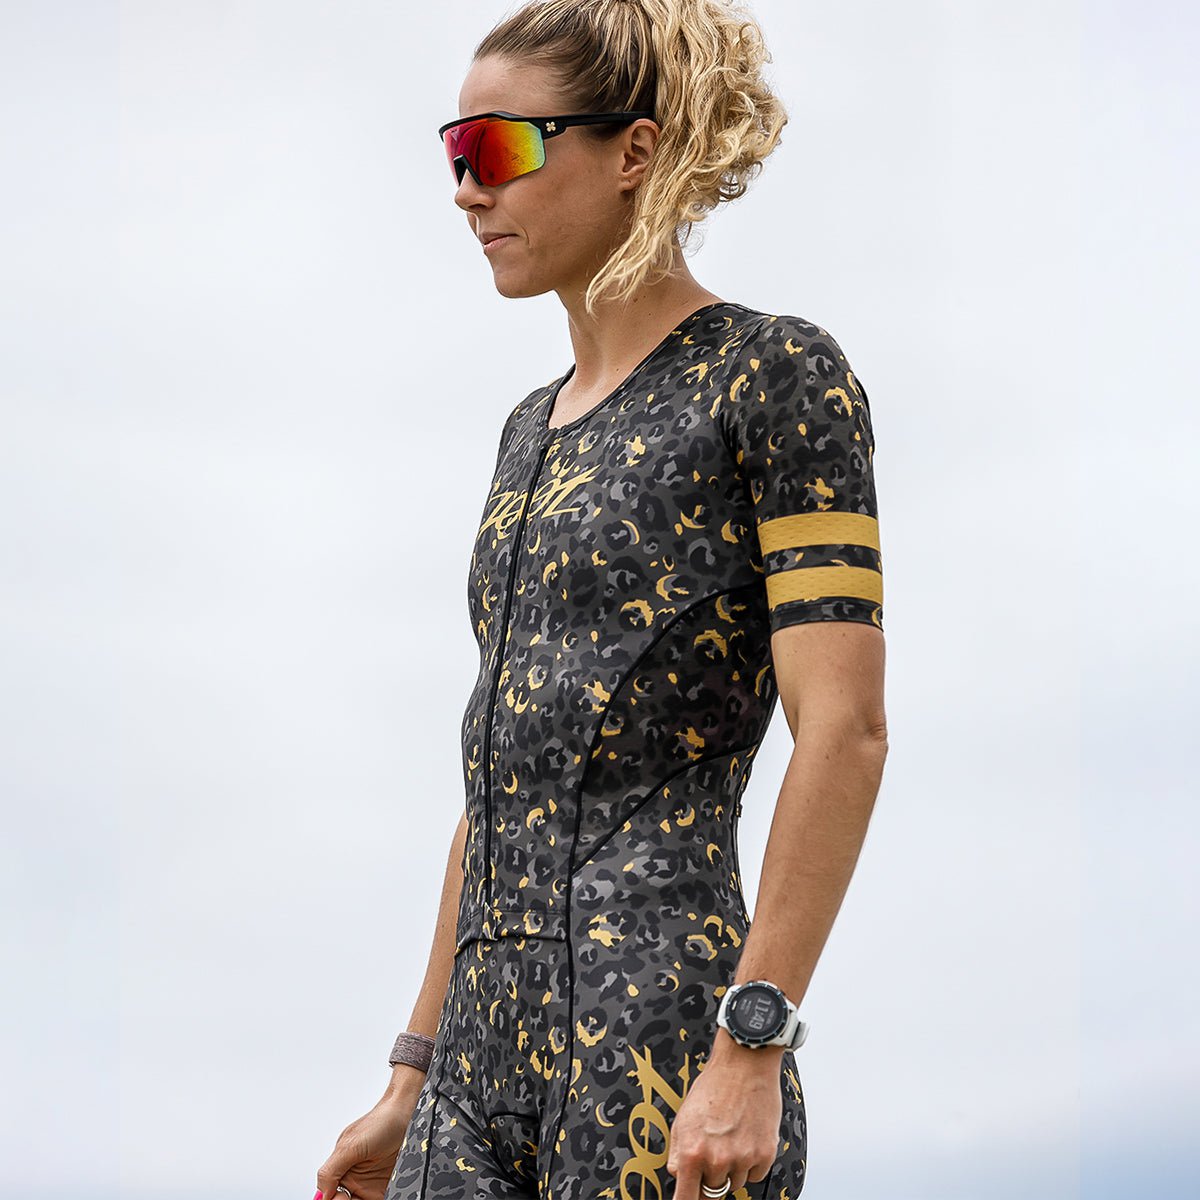 Zoot Sports TRI RACESUITS Women's Ltd Tri Aero Fz Racesuit - Cheetah